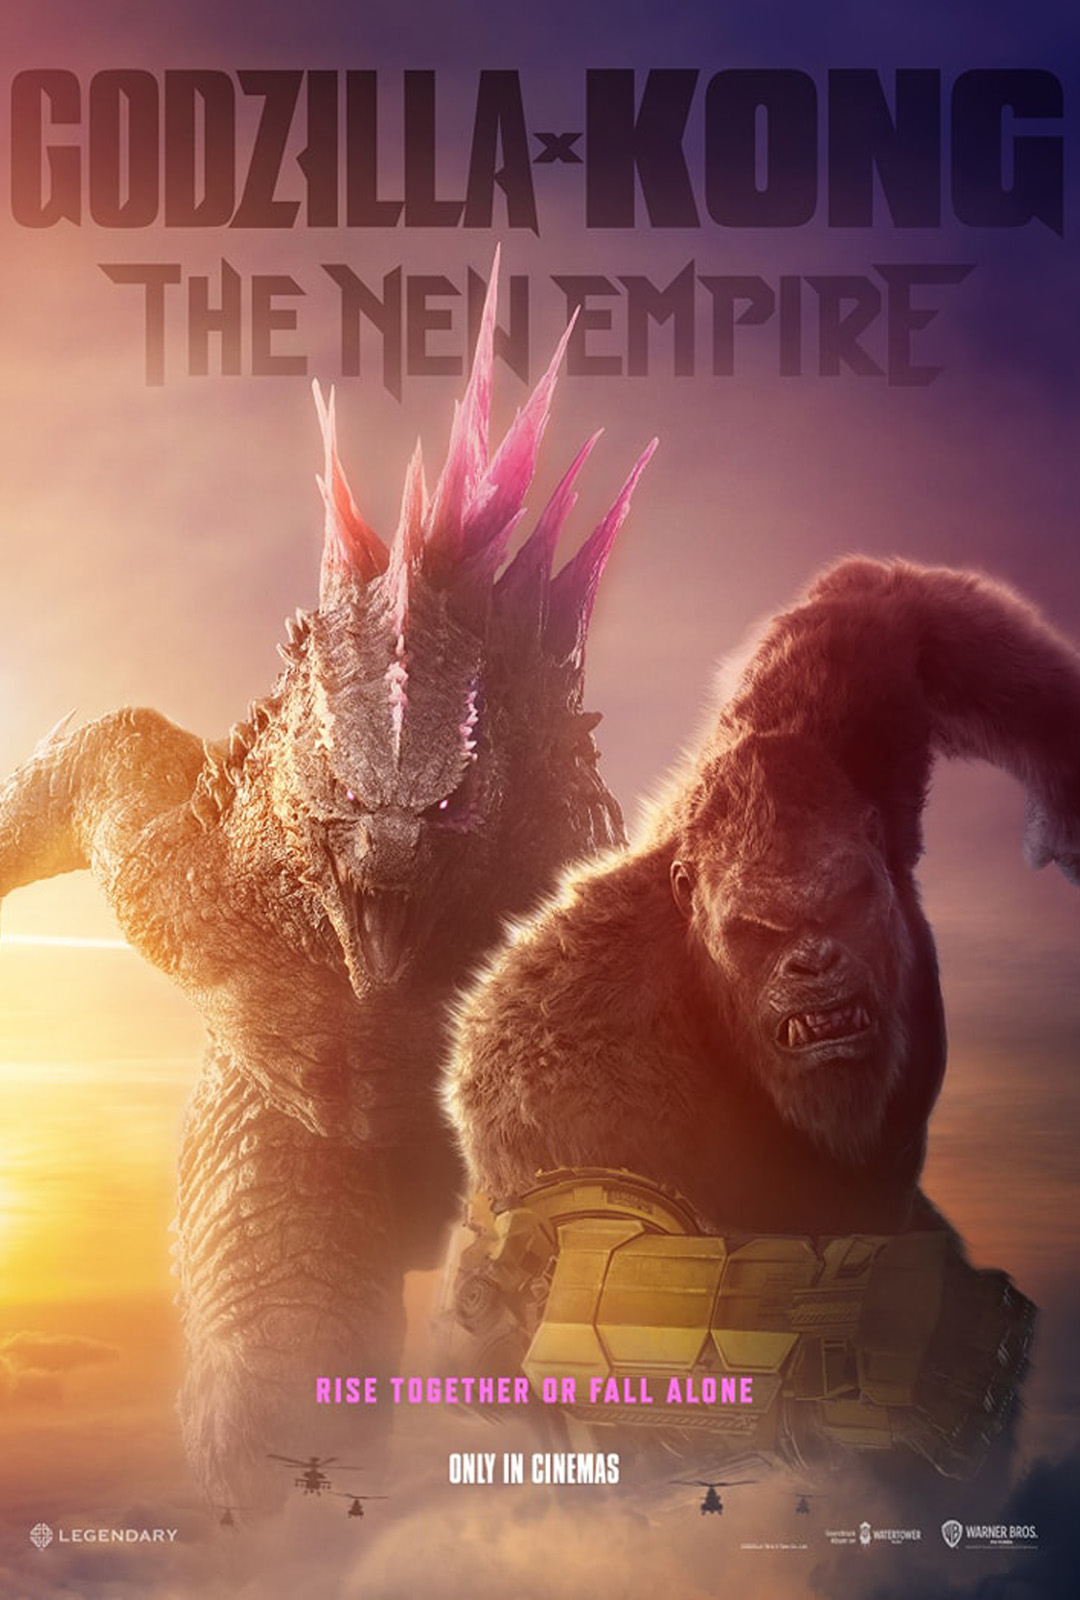 Movie Poster: Godzilla x Kong: The New Empire